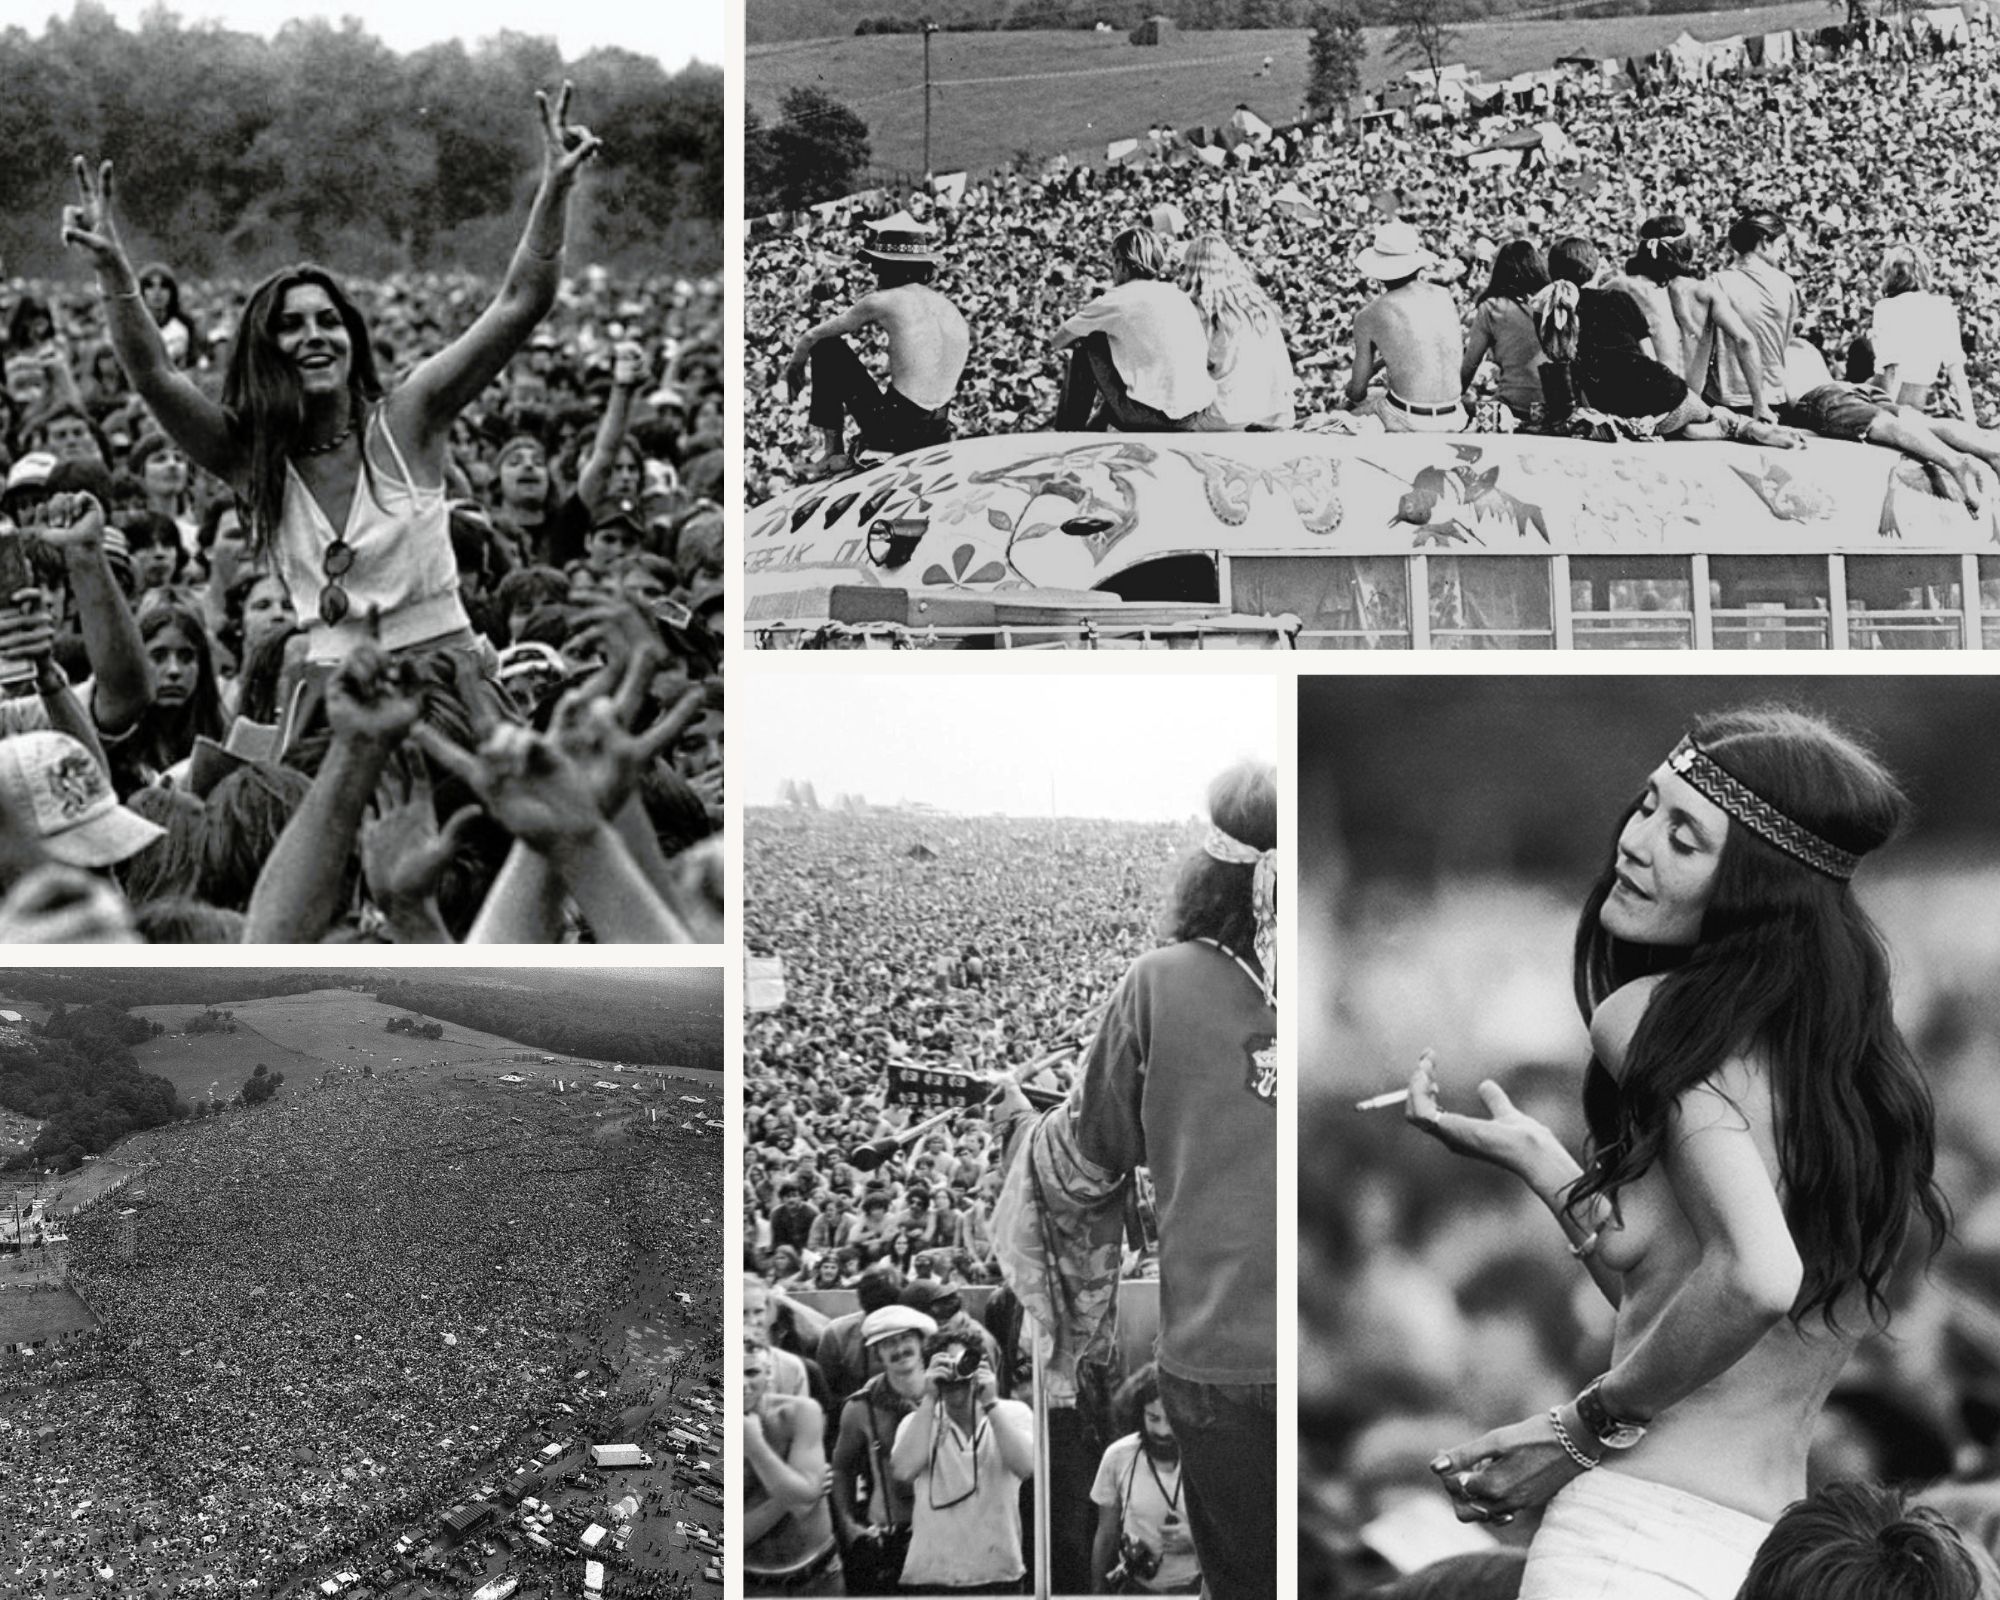 festival de contre culture hippie Woodstock USA concert de woodstock 1969